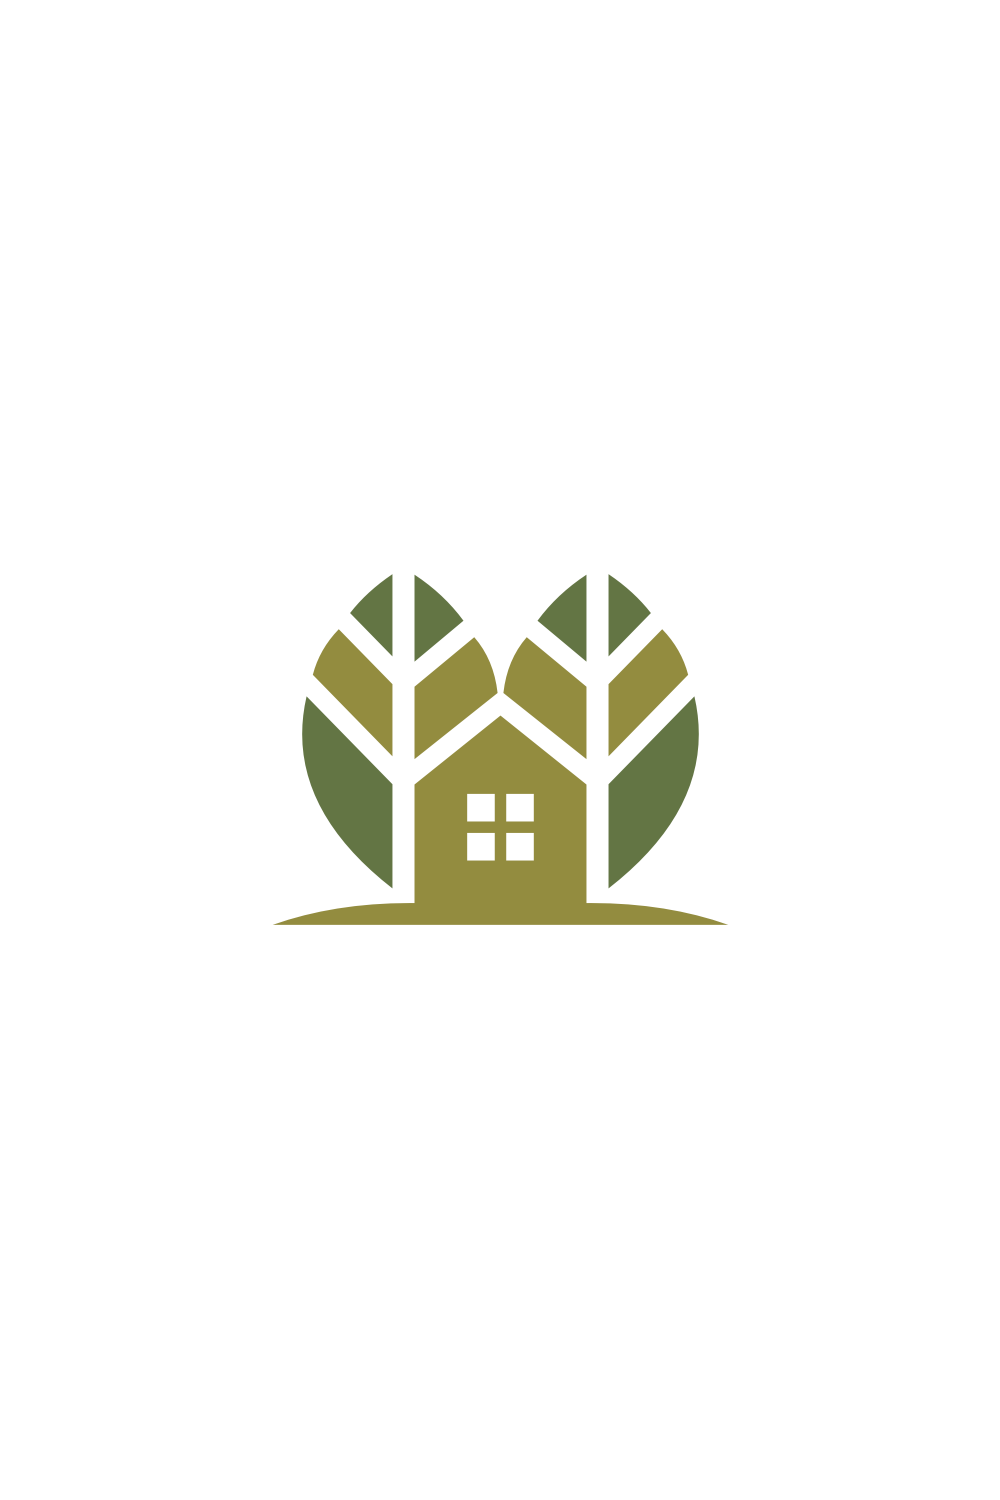 Eco Friendly Homes Logo pinterest image.